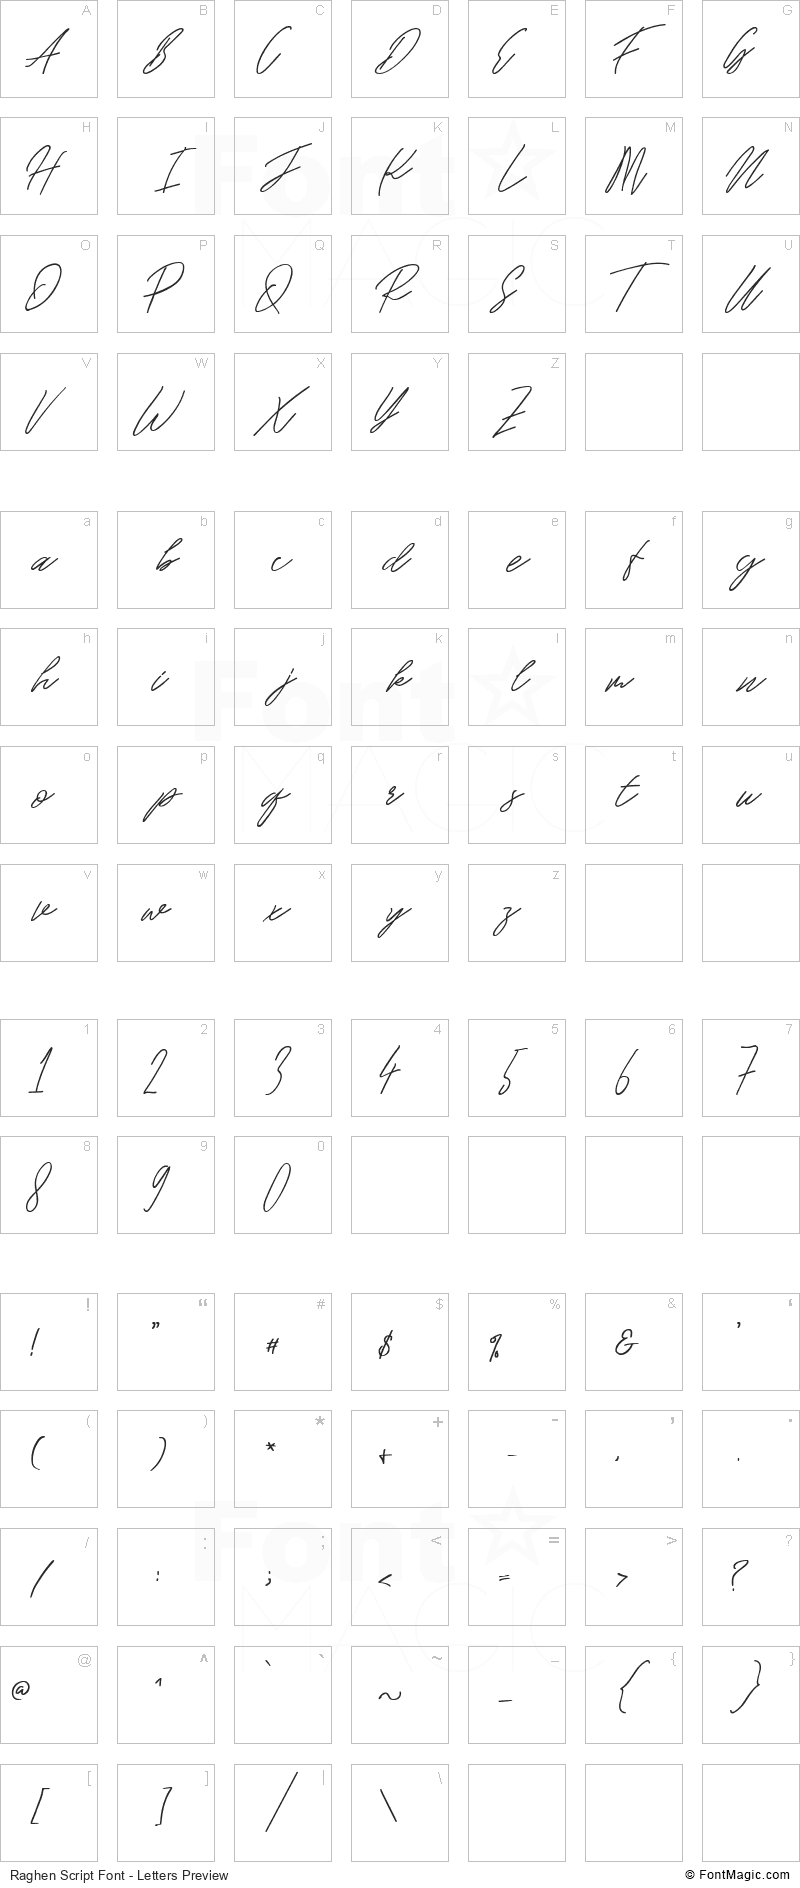 Raghen Script Font - All Latters Preview Chart